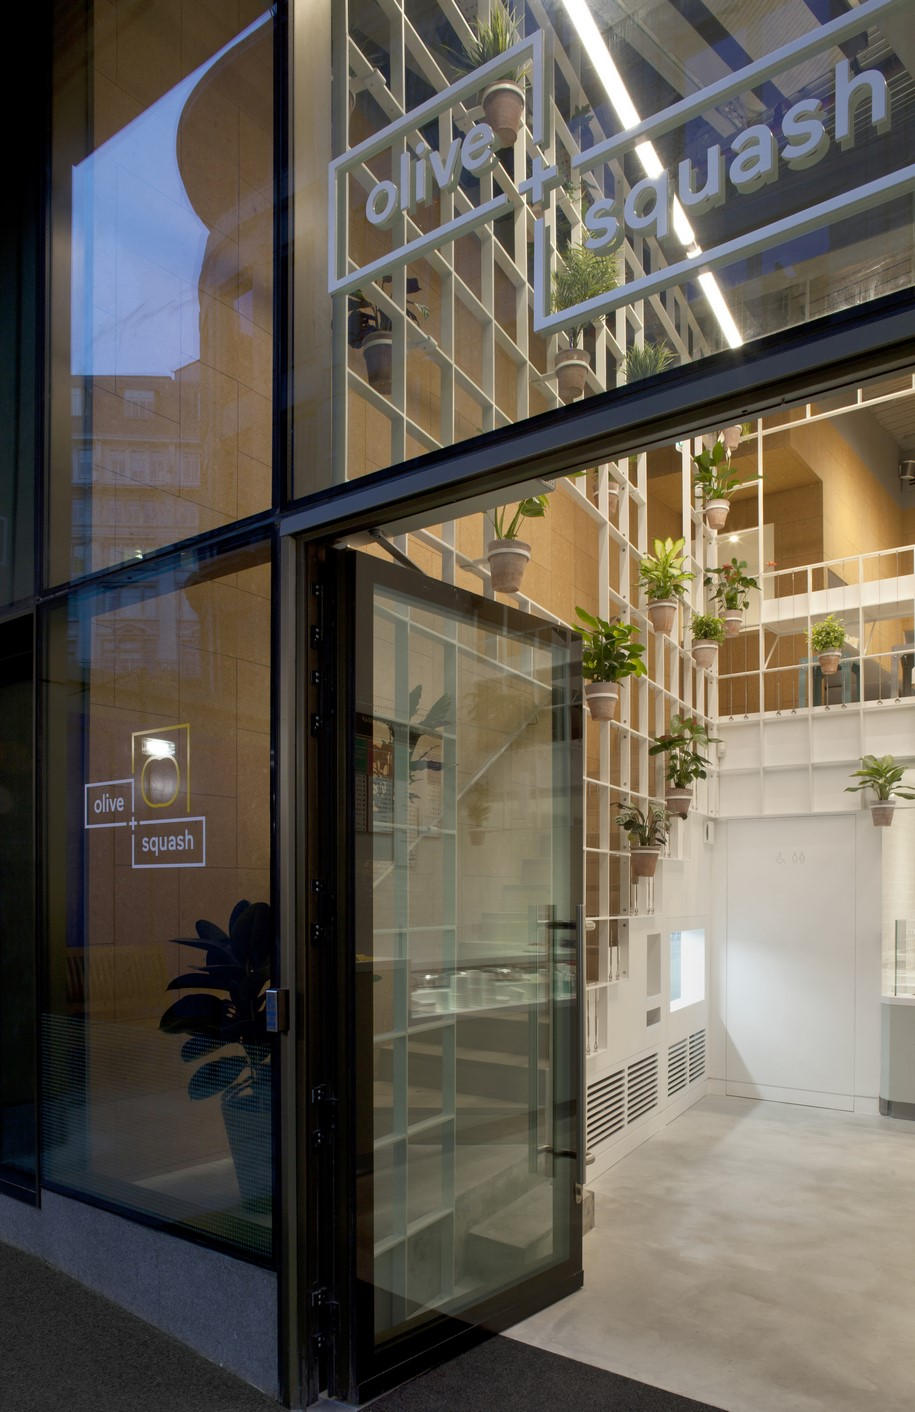 Archisearch Neiheiser Argyros Complete a City of London Café Split in Half by a White Steel Grid